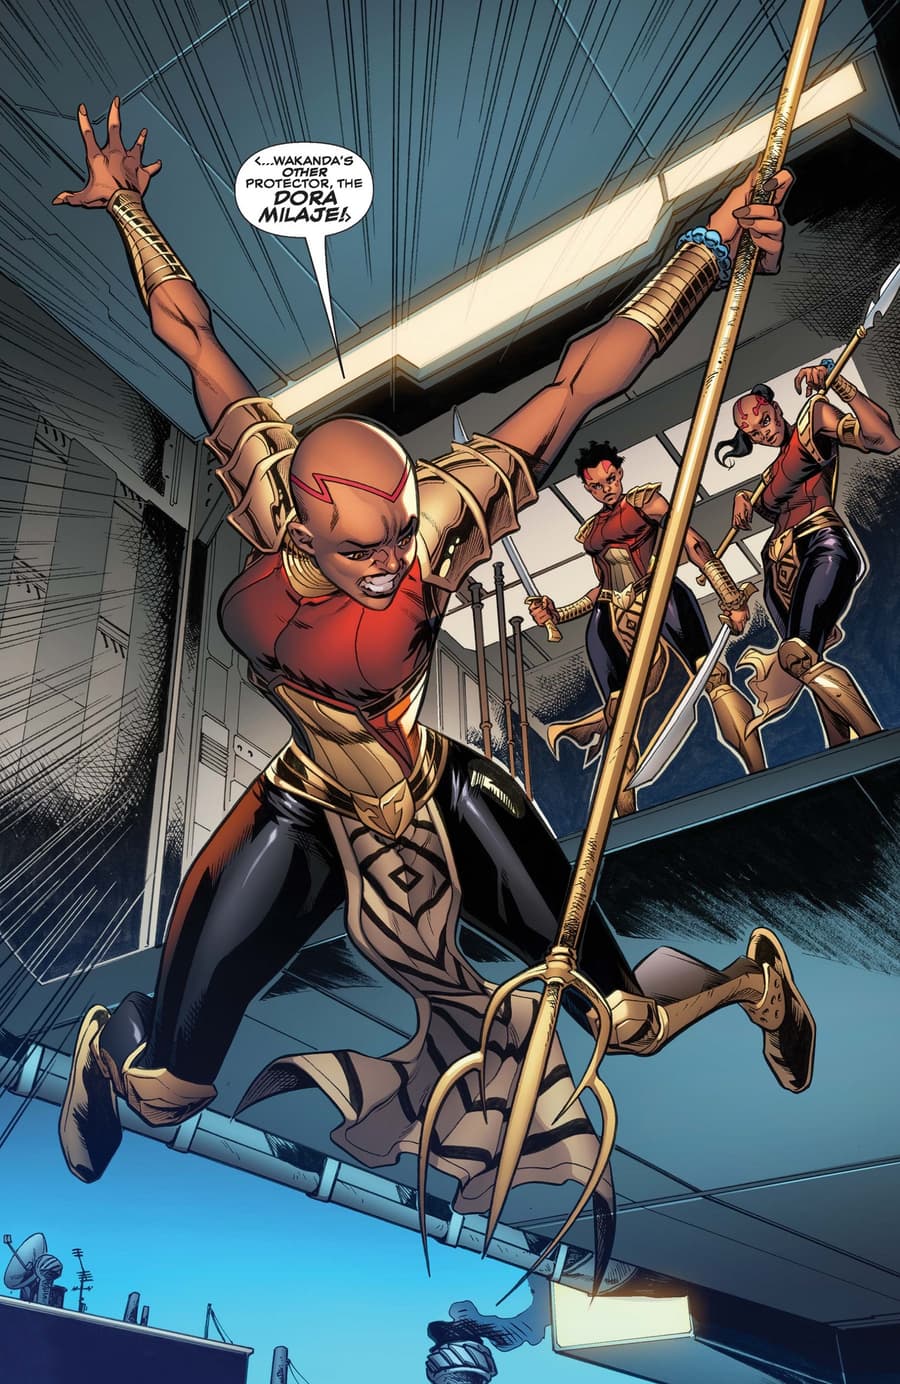 Okoye leads her warriors into action in AMAZING SPIDER-MAN: WAKANDA FOREVER (2018) #1.